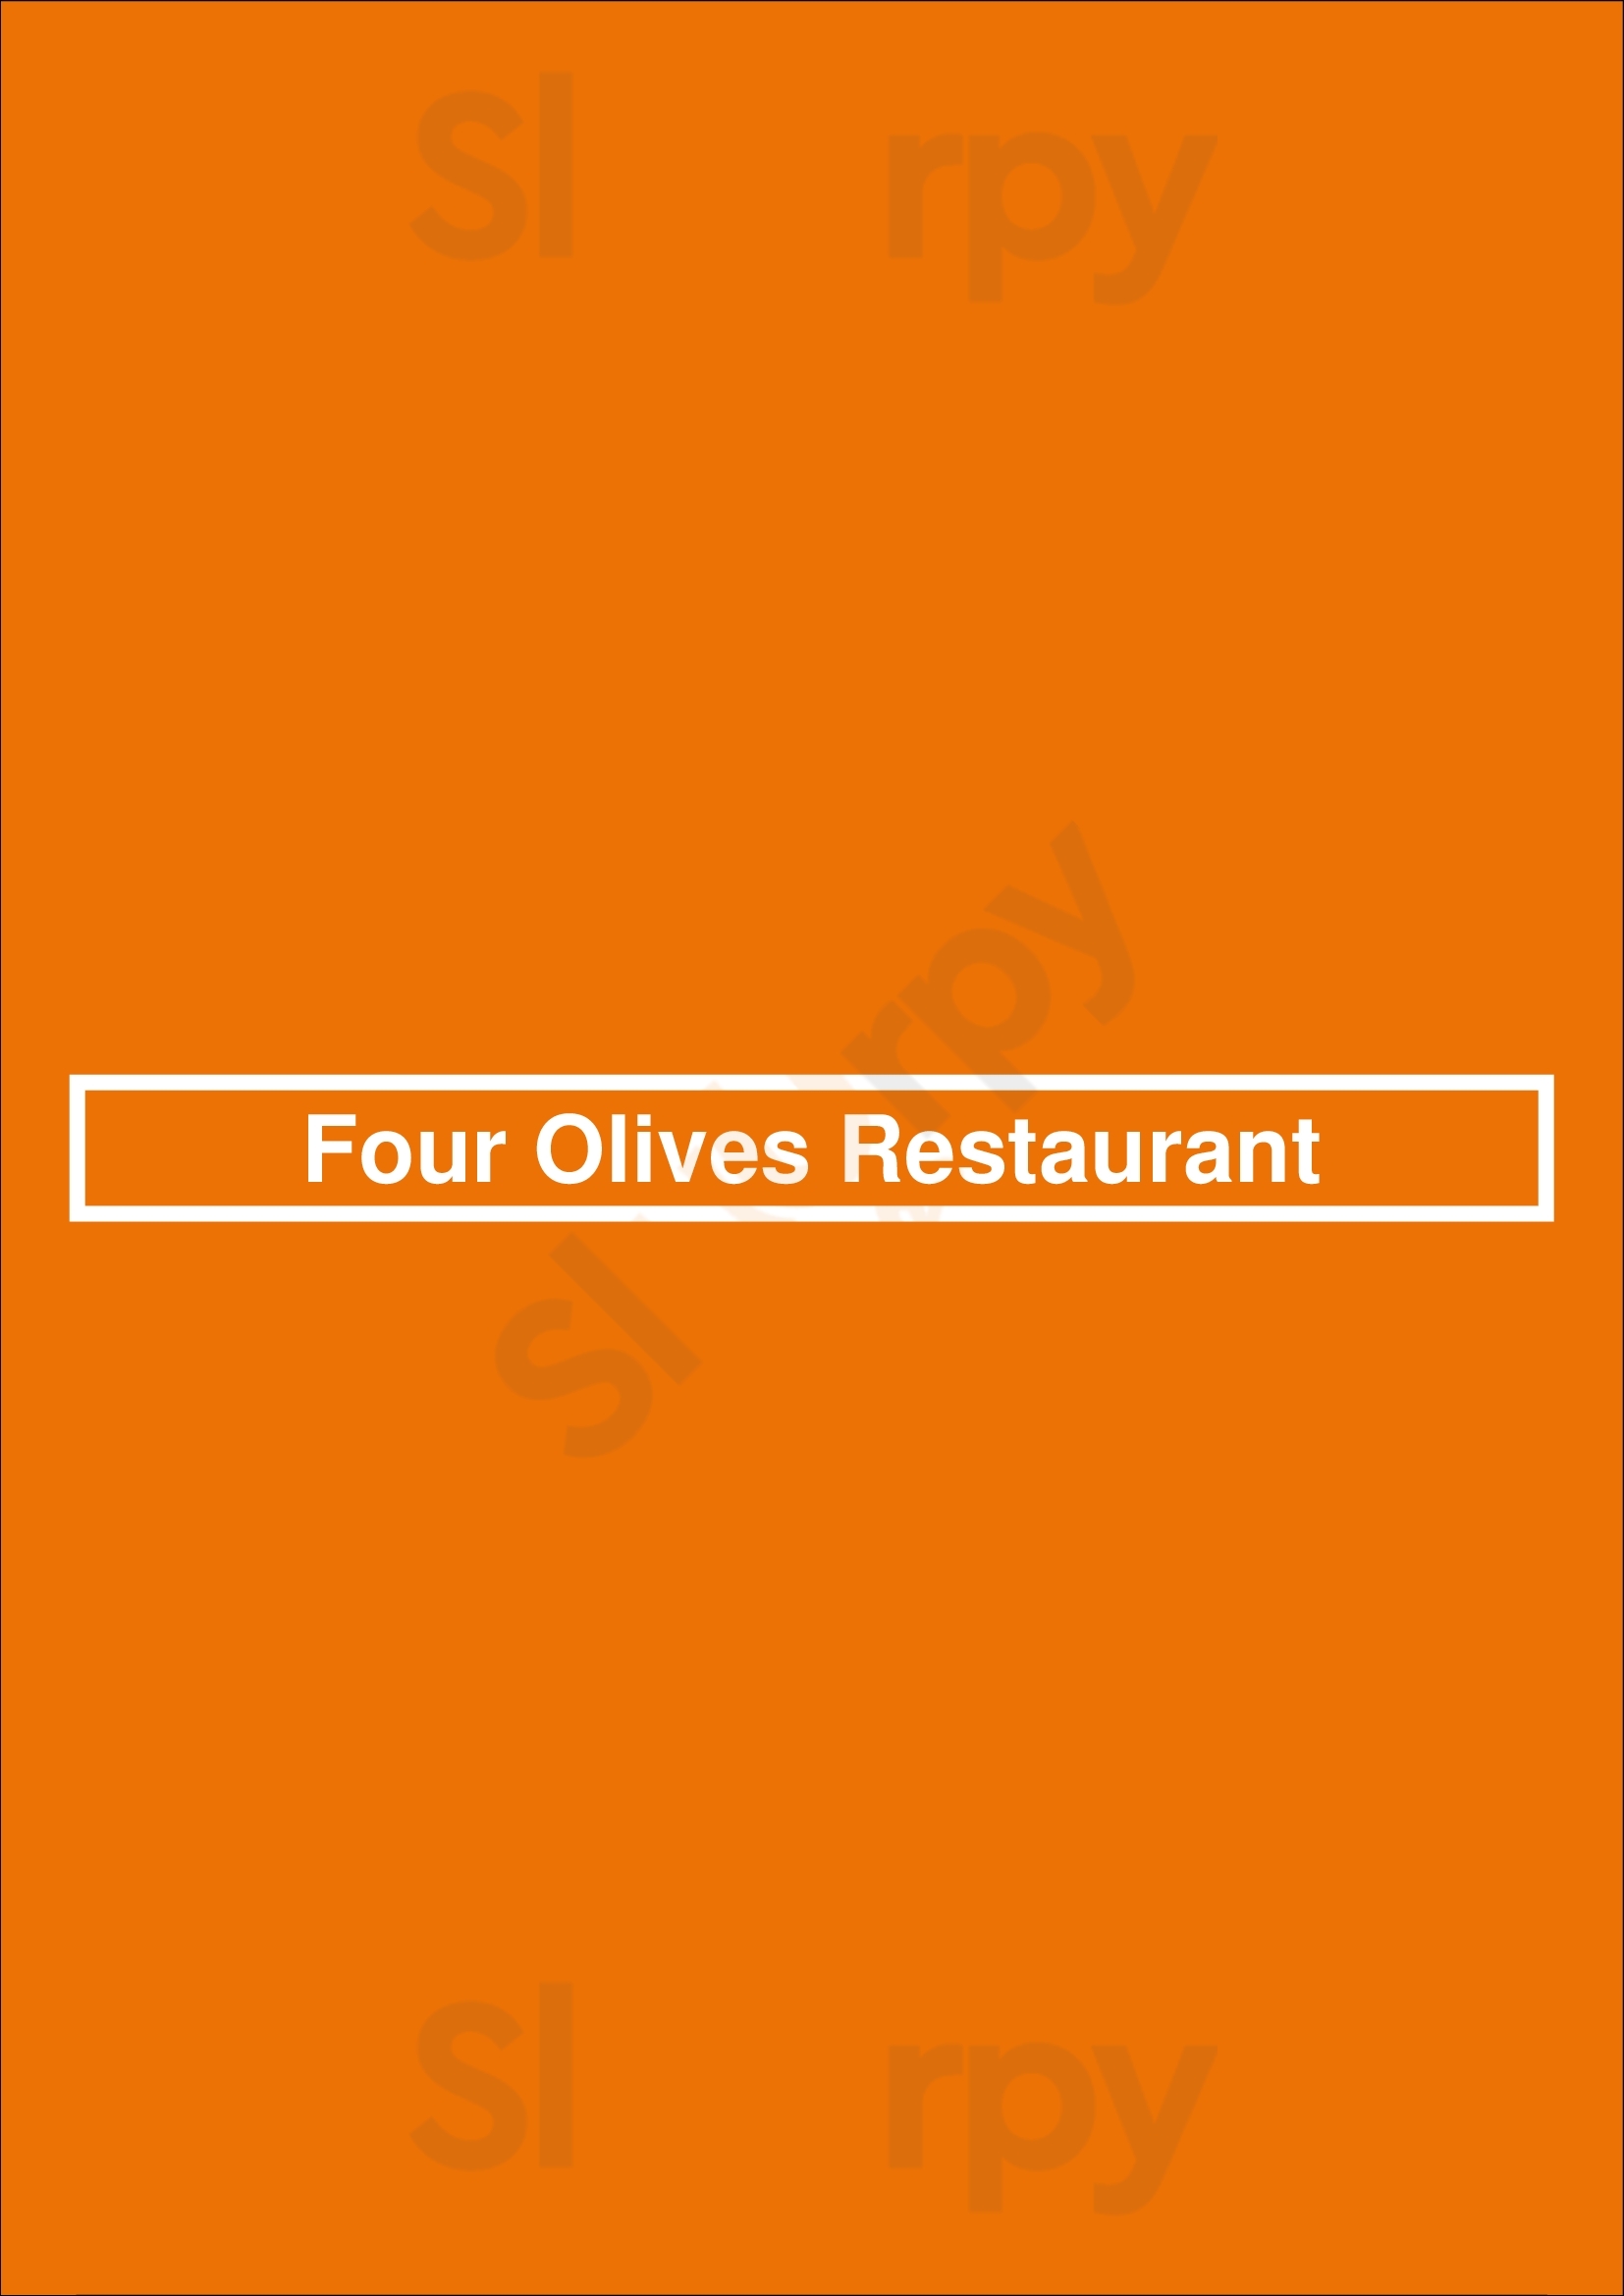 Four Olives Restaurant Vancouver Menu - 1